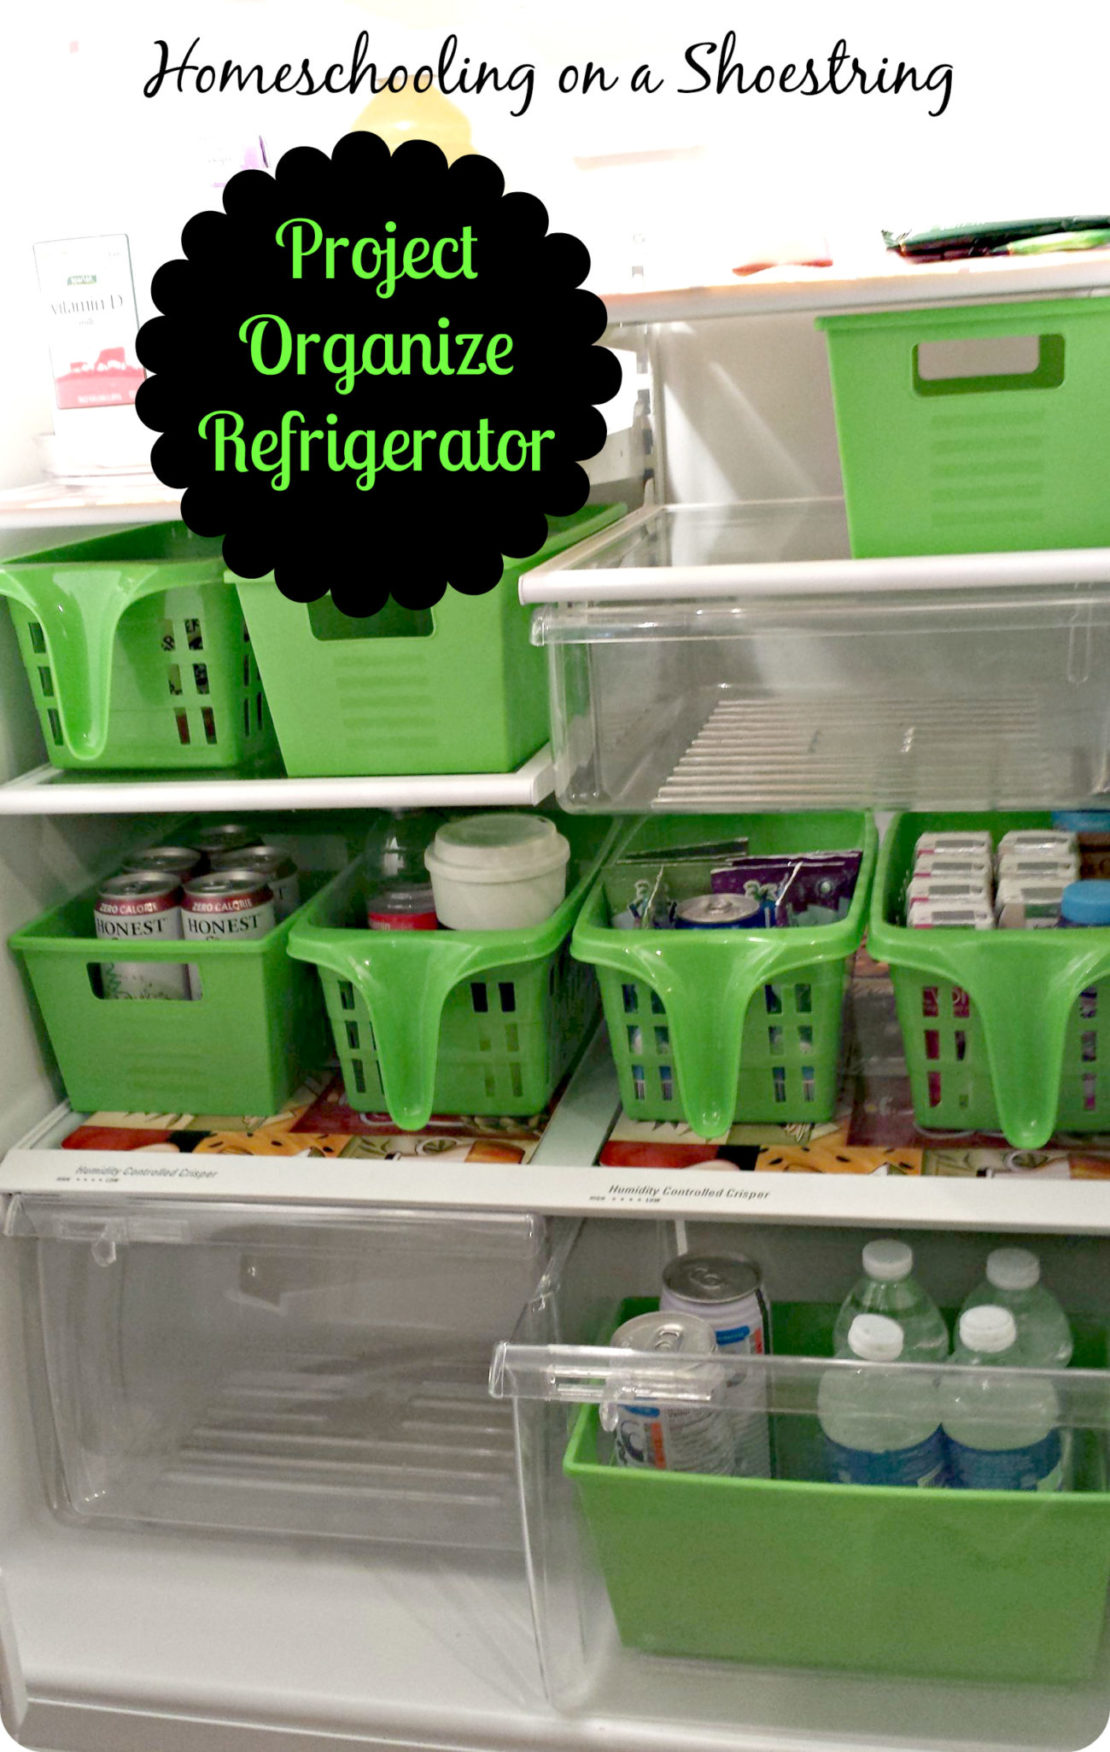 Project Organize Refrigerator